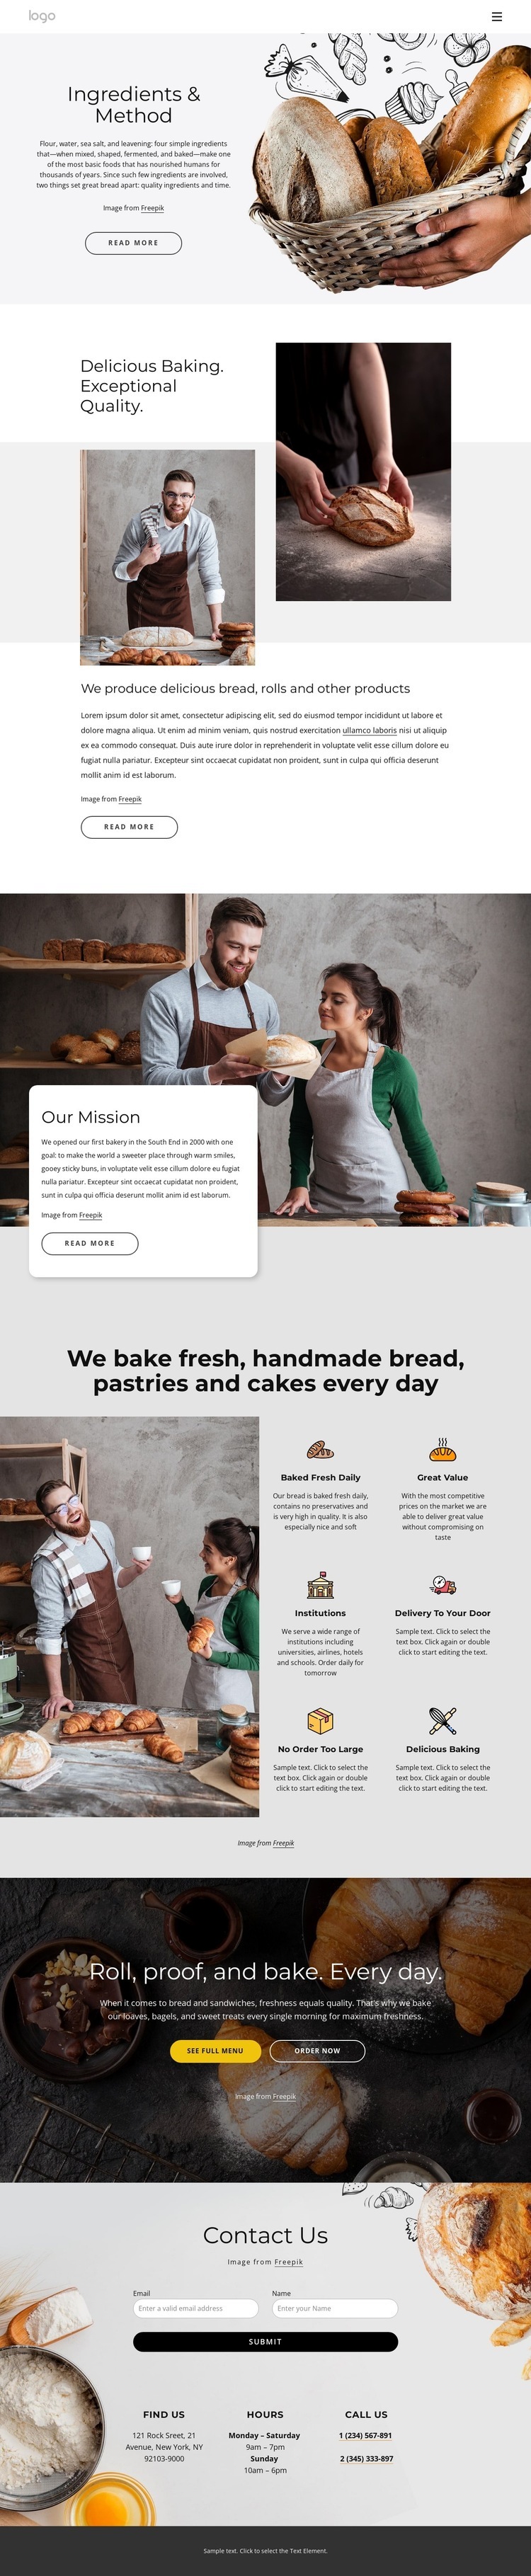 We bake handmade bread Elementor Template Alternative